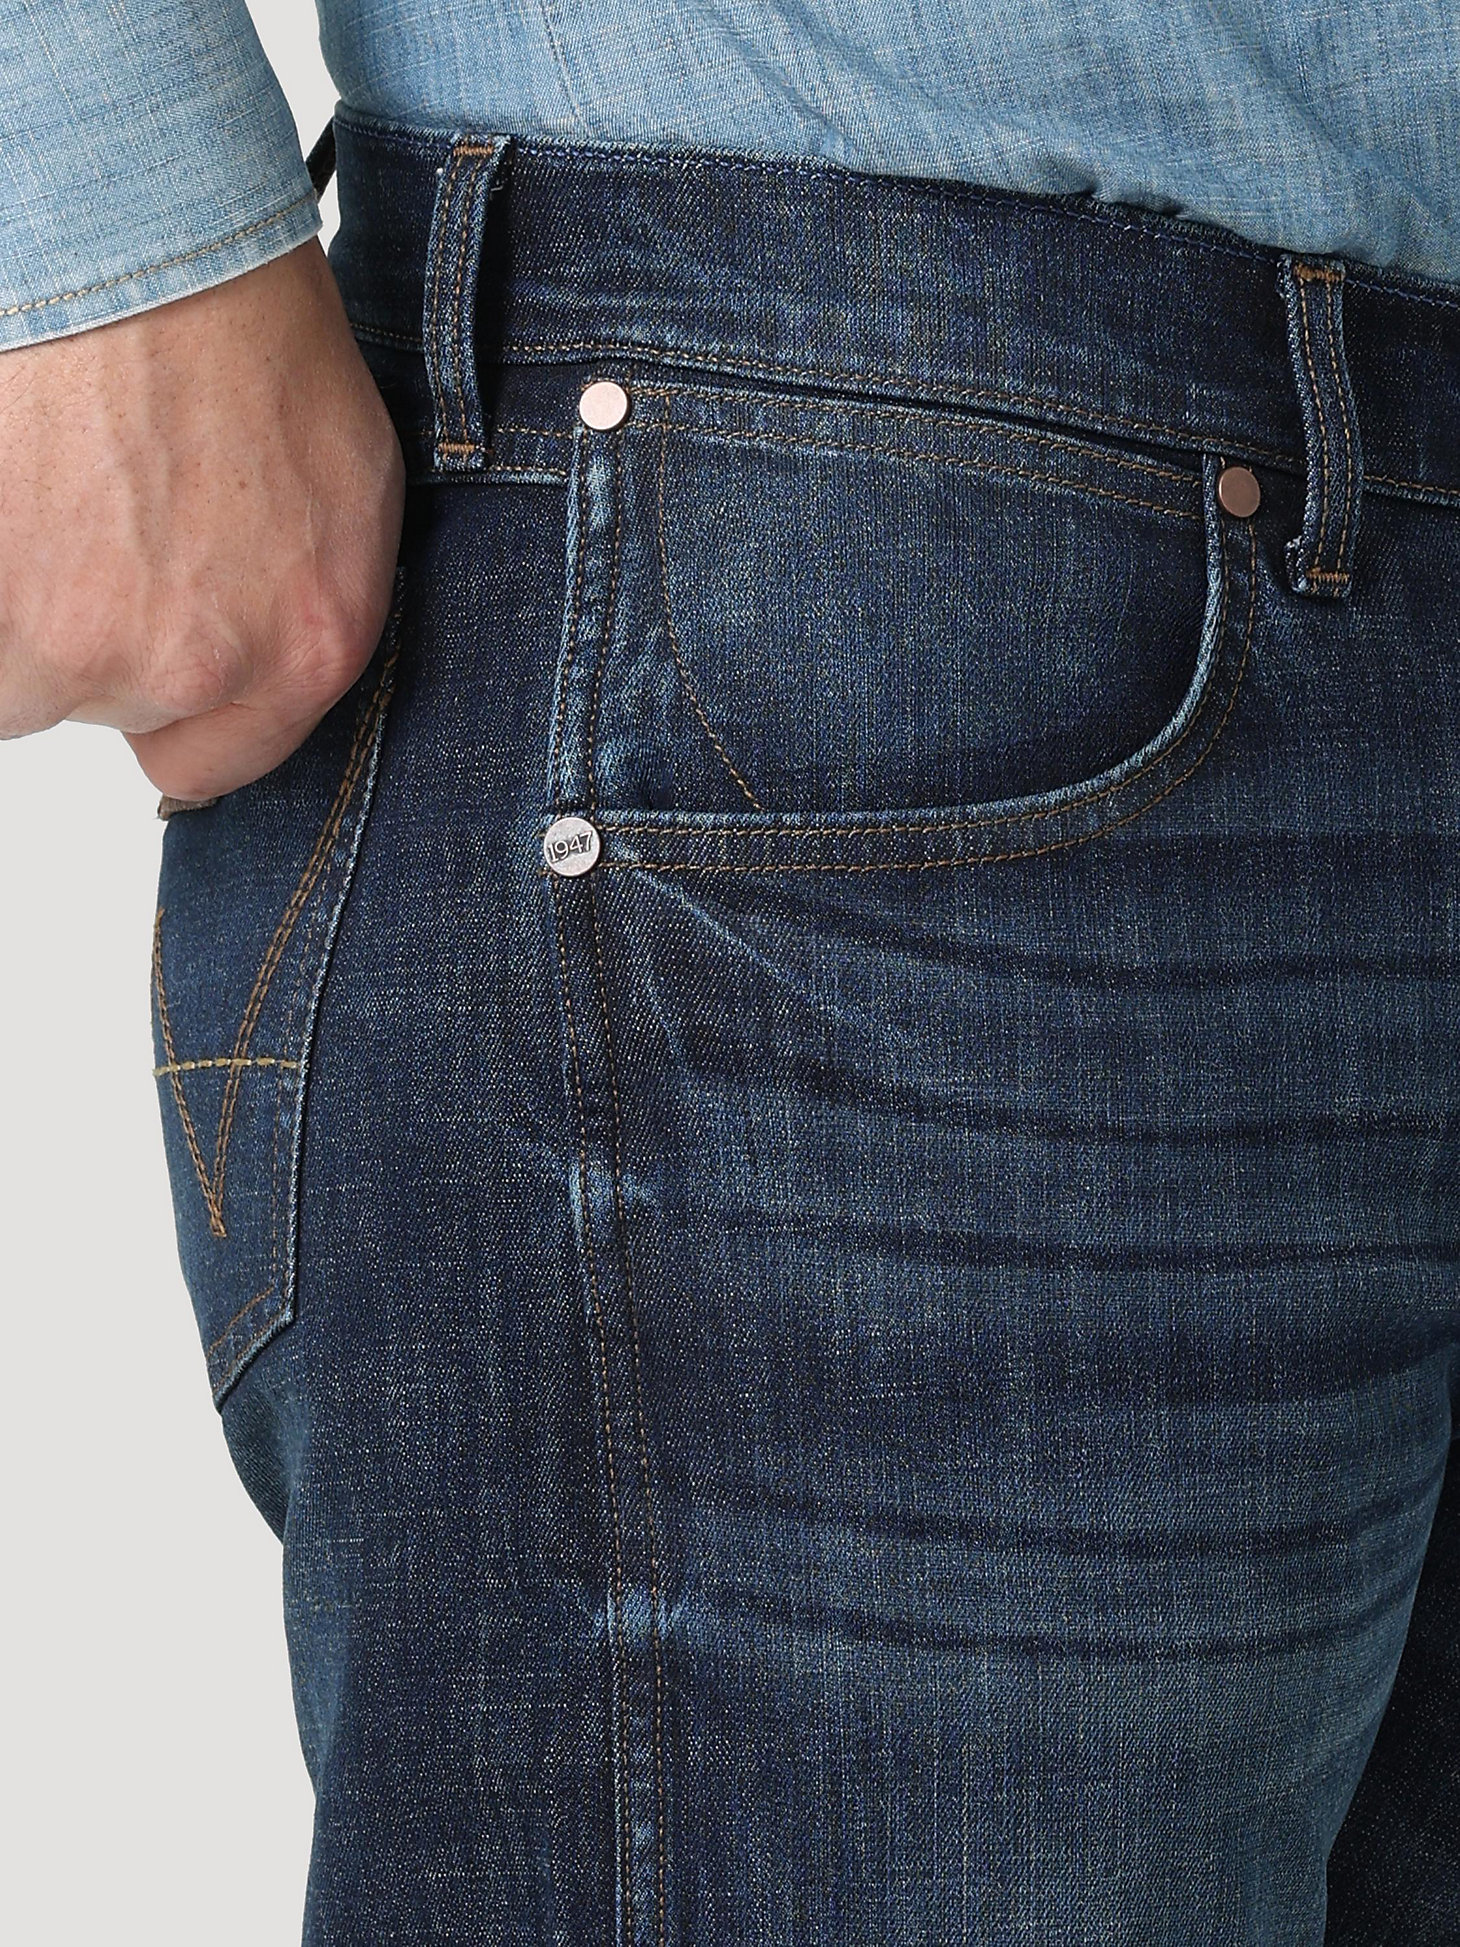 Men's Wrangler Retro® Slim Fit Bootcut Jean in Merriam alternative view 4